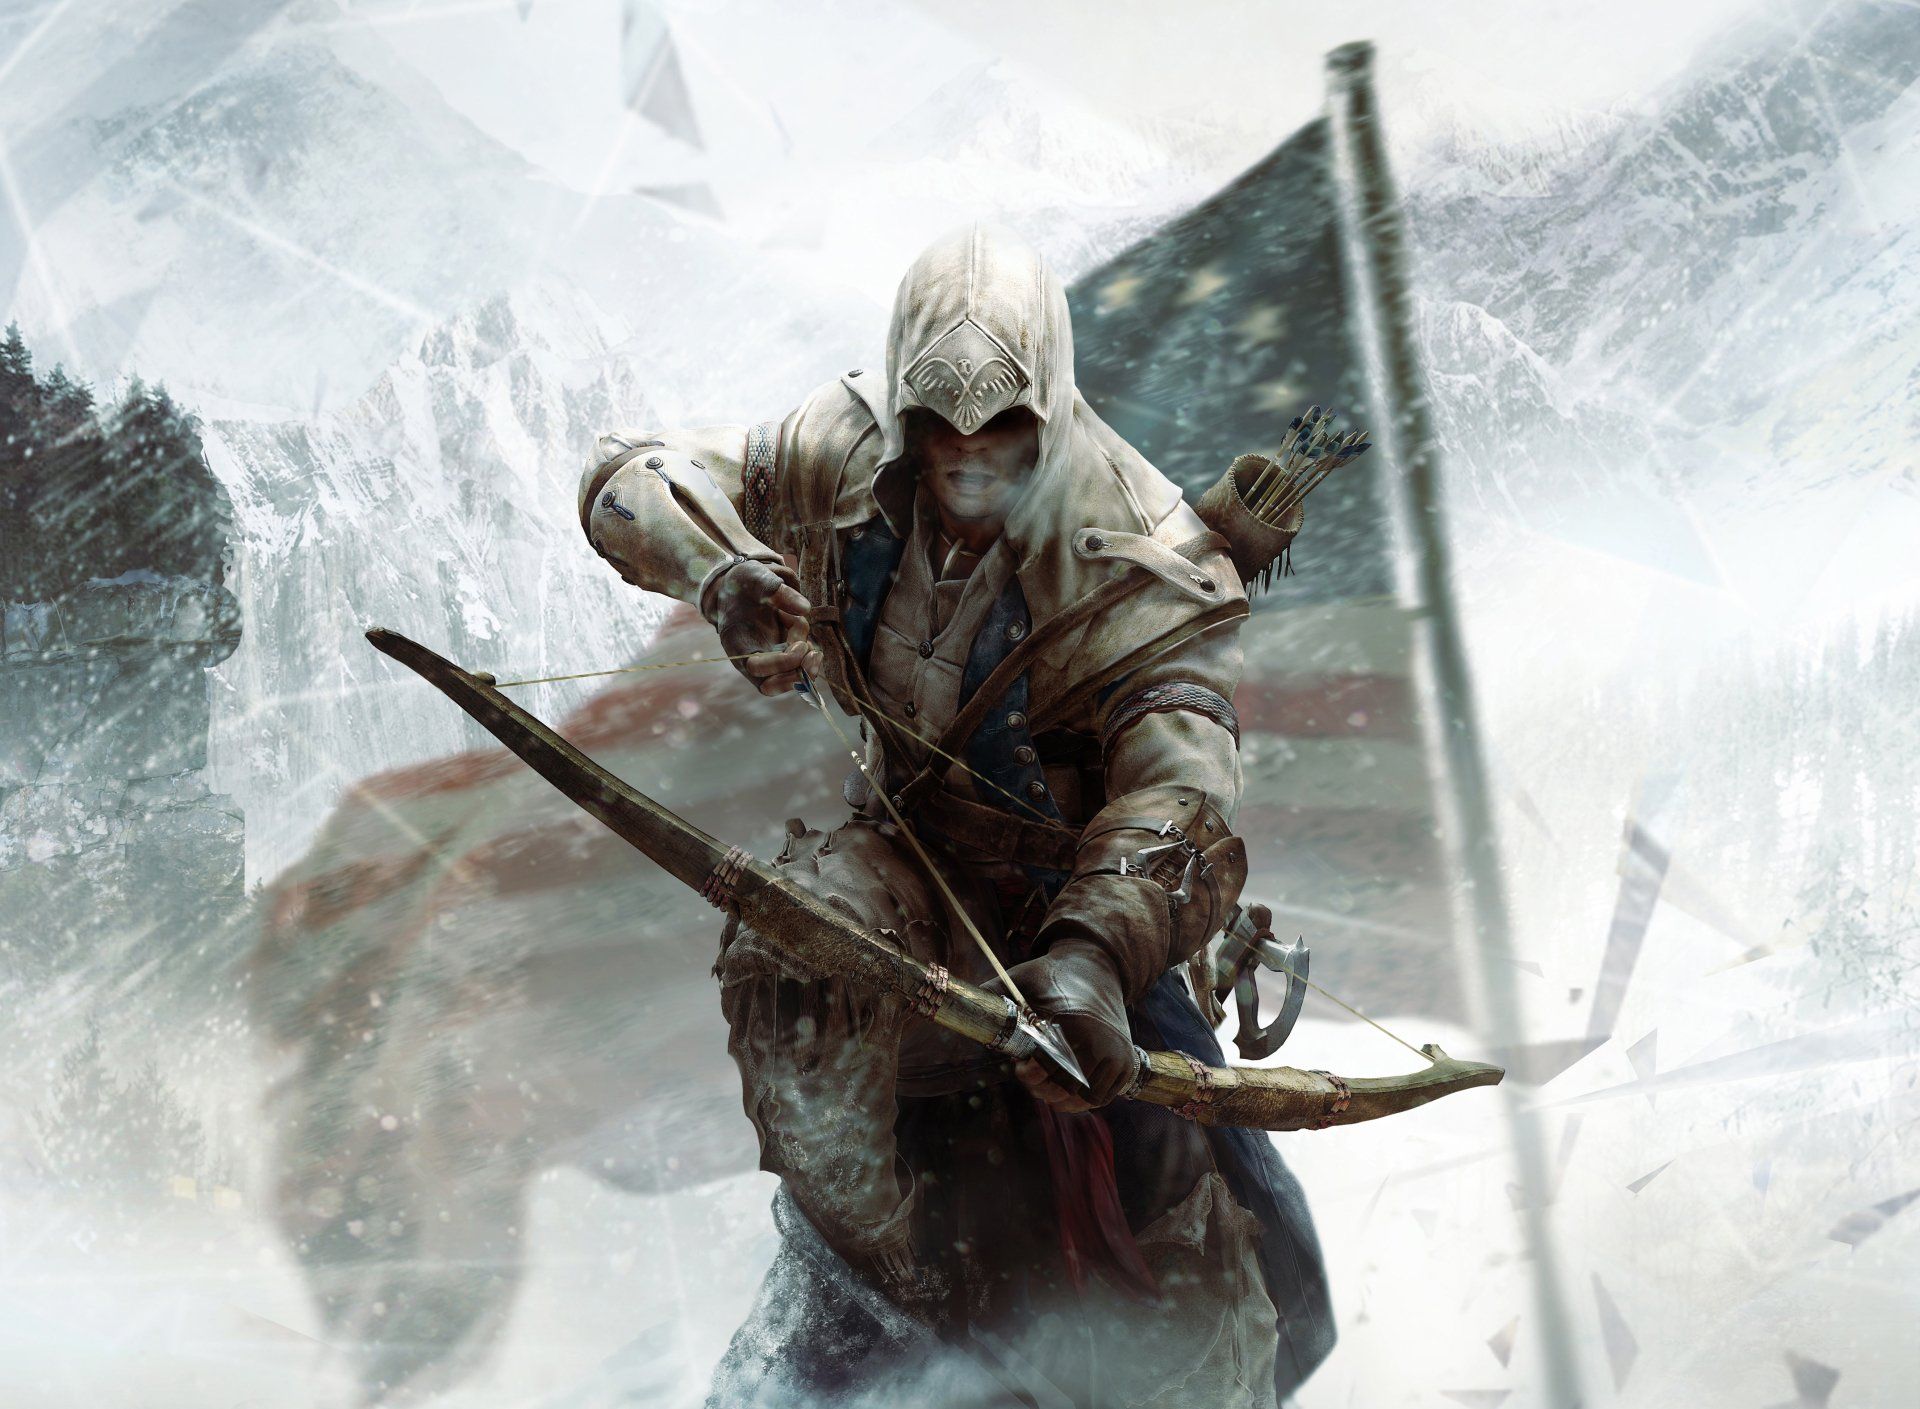 4K Ultra HD Assassin's Creed III Wallpaper